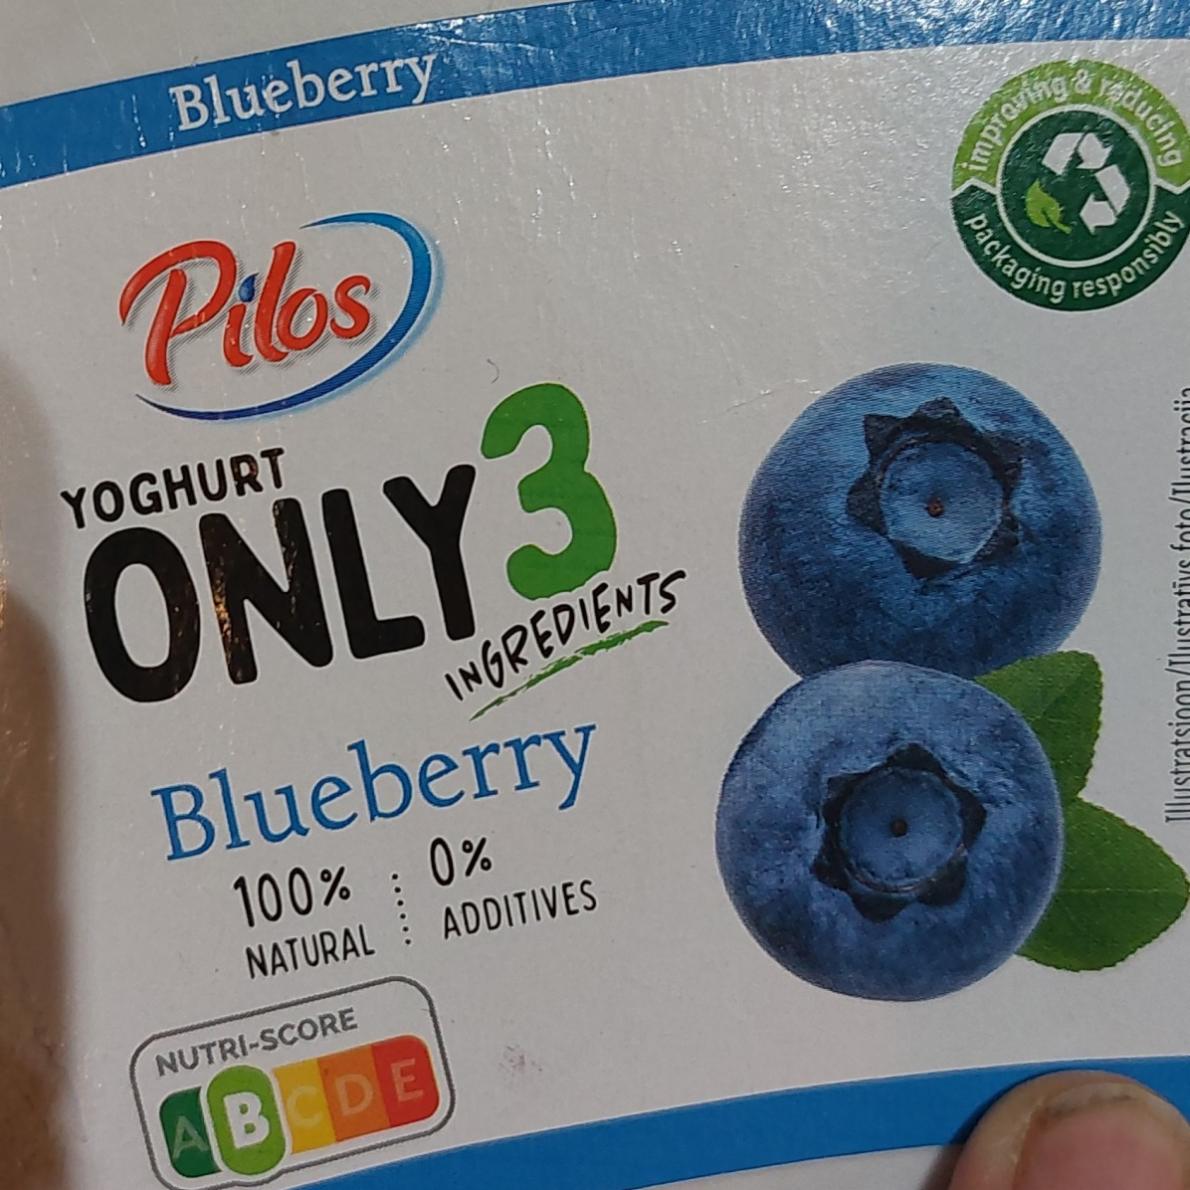 Фото - Yoghurt only3 ingredients Blueberry Pilos